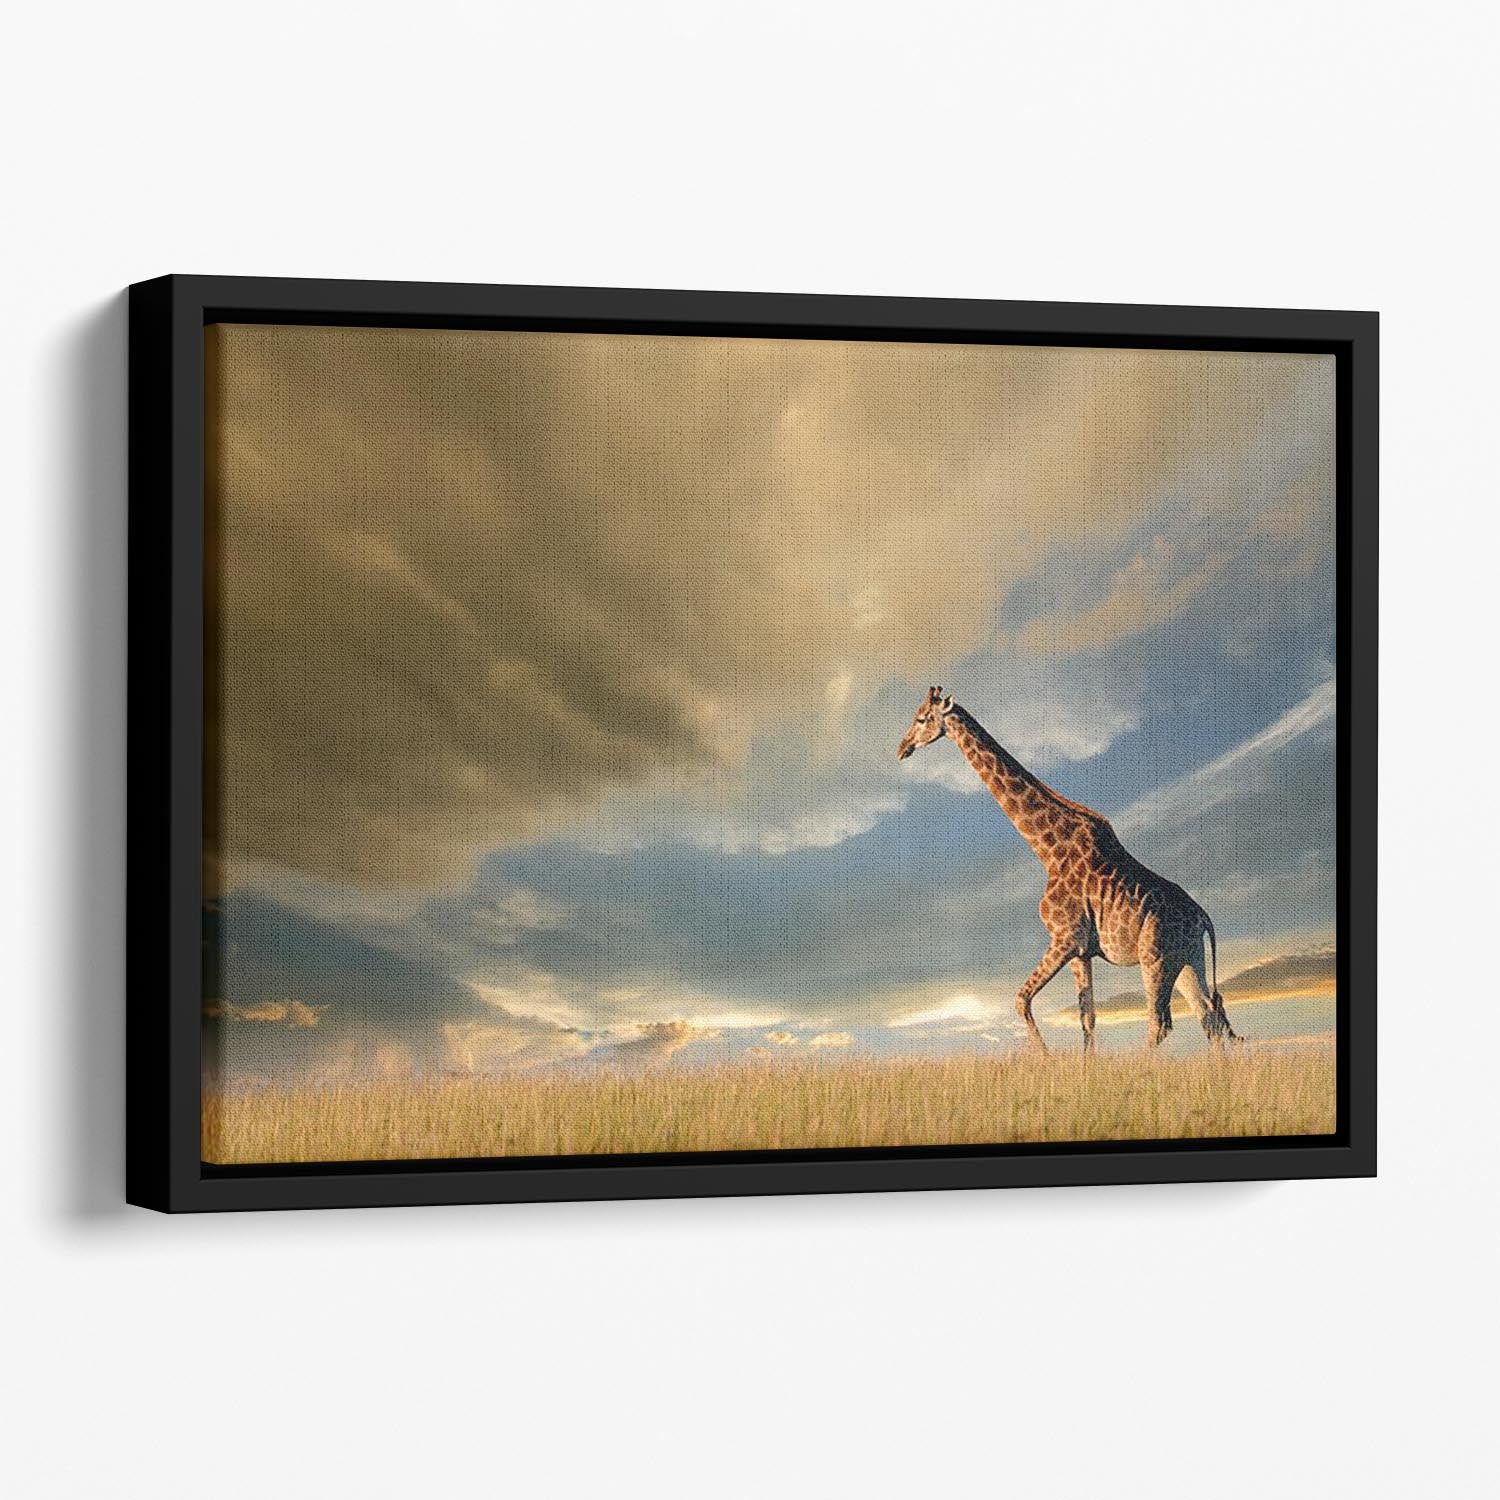 A giraffe walking on the African plains against a dramatic sky Floating Framed Canvas - Canvas Art Rocks - 1